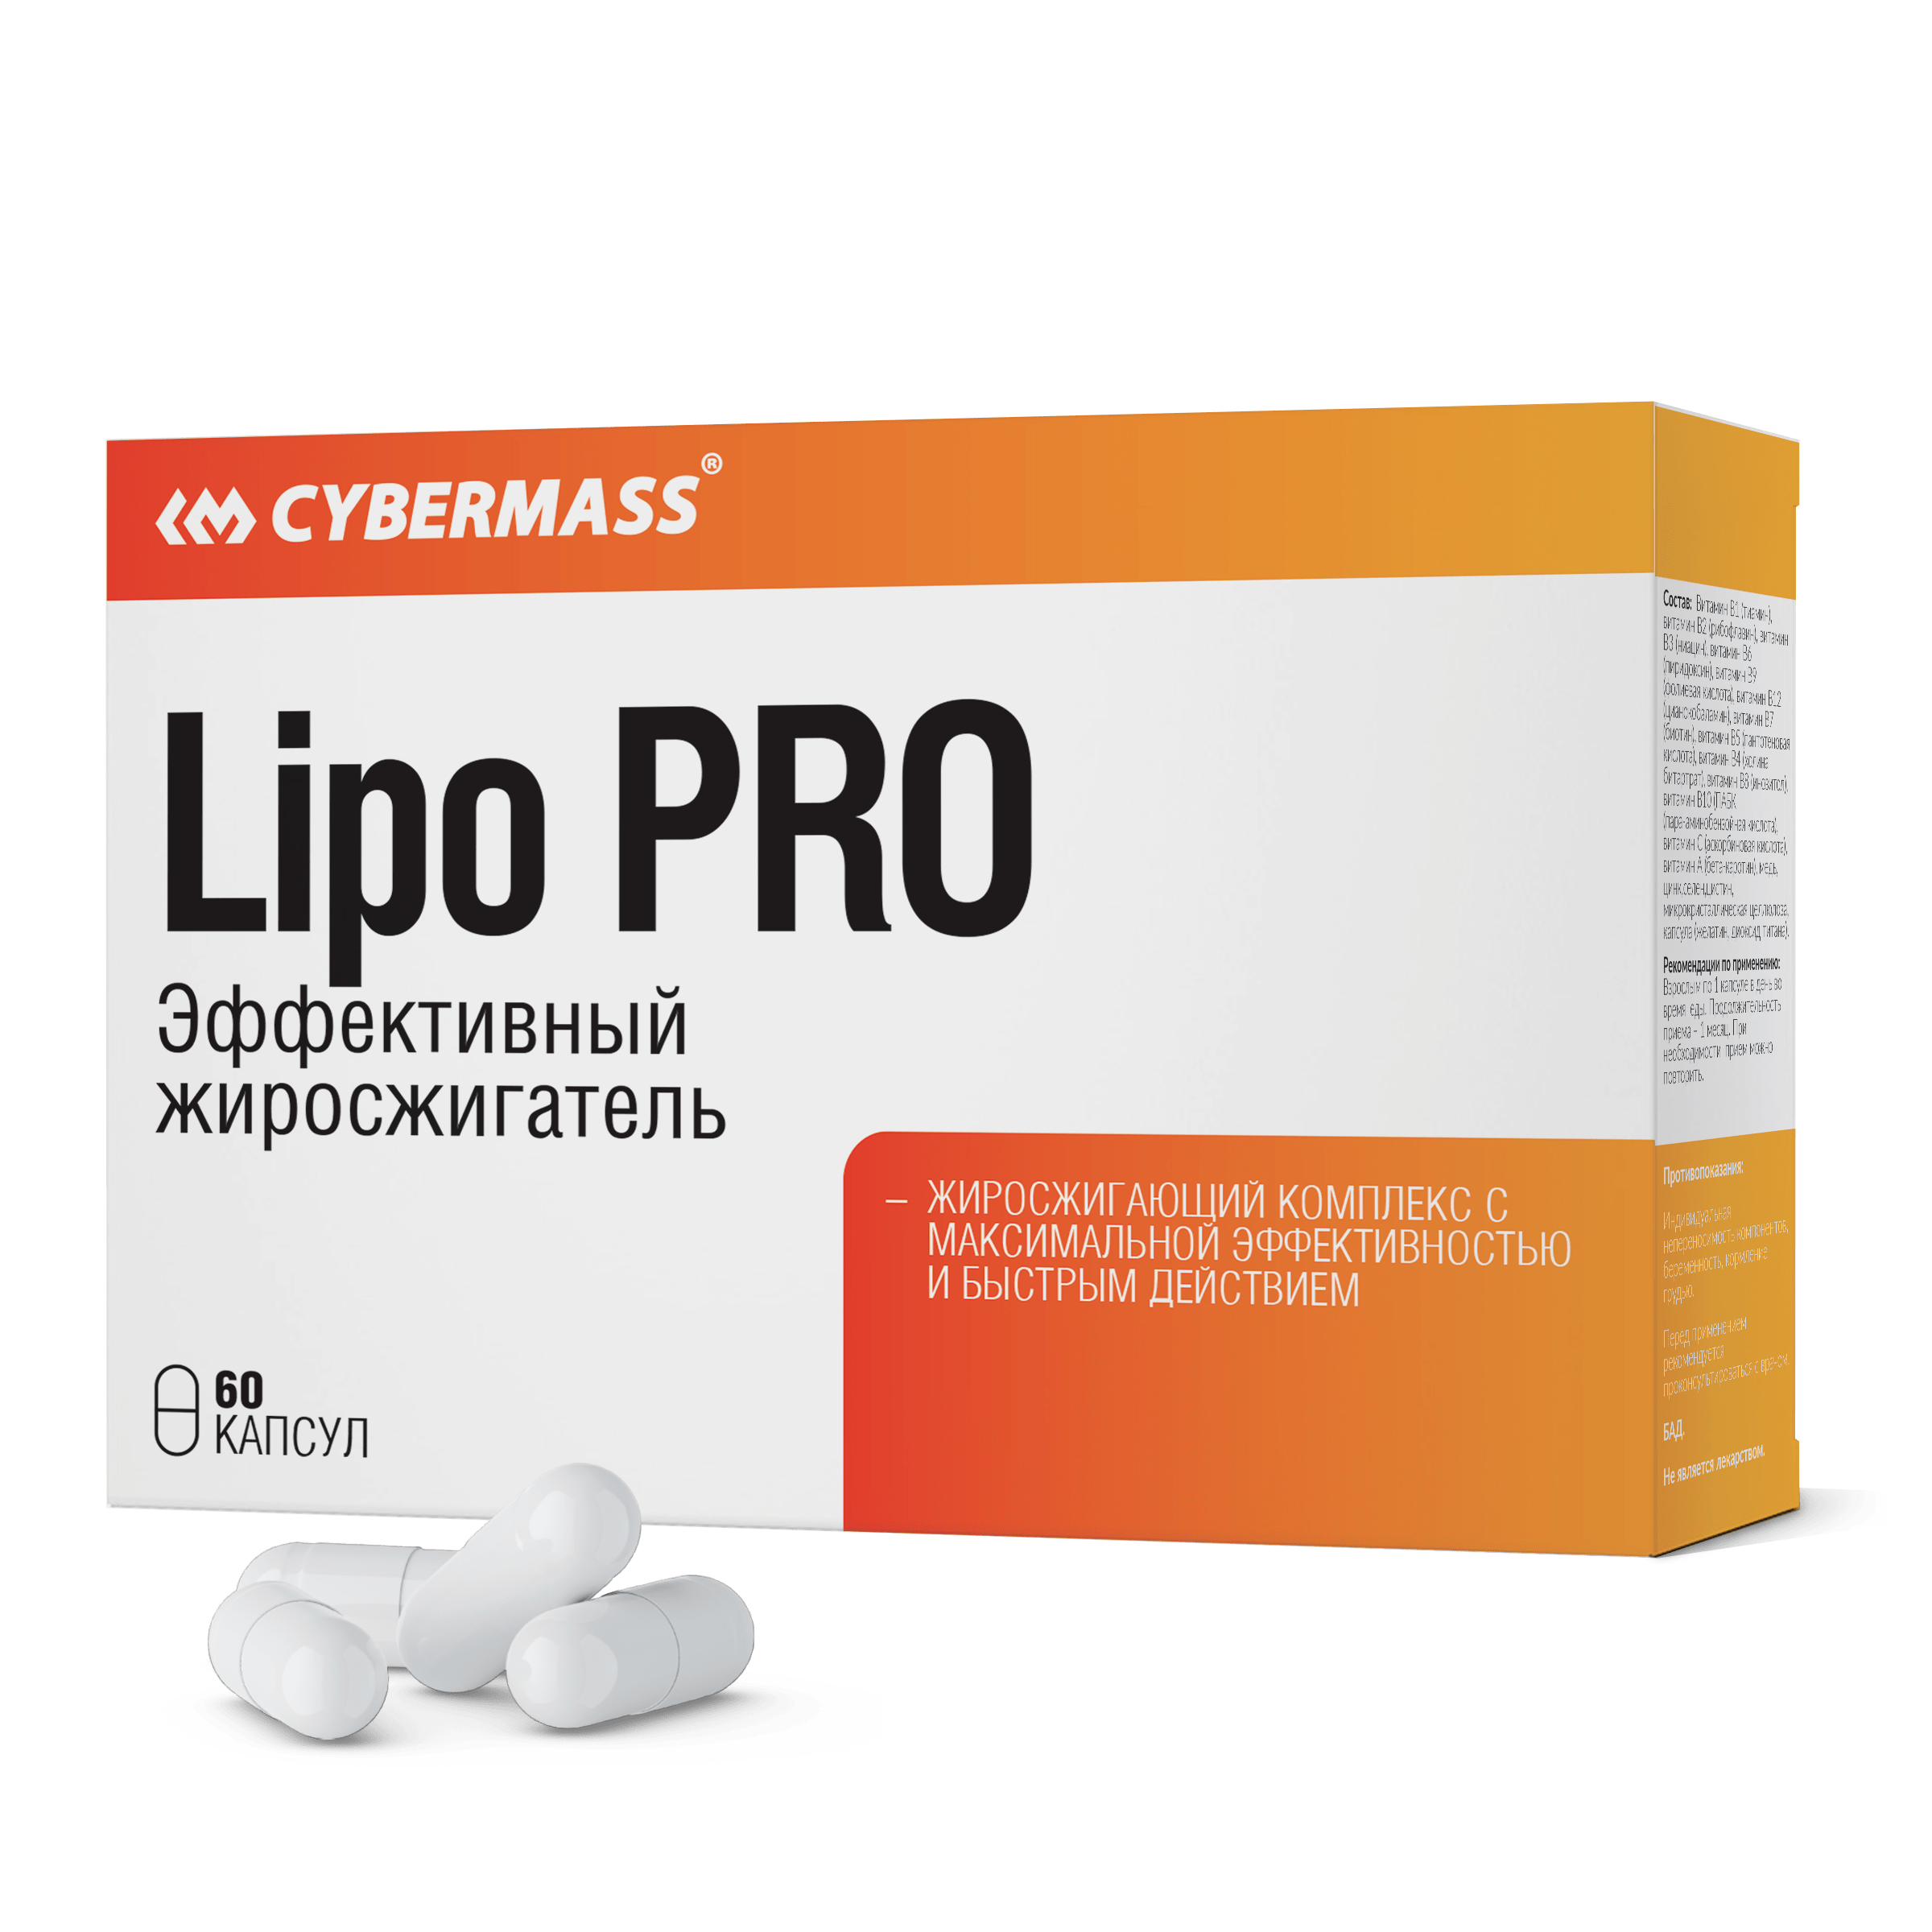 Жиросжигатель CYBERMASS Lipo Pro, блистеры, 60 капсул